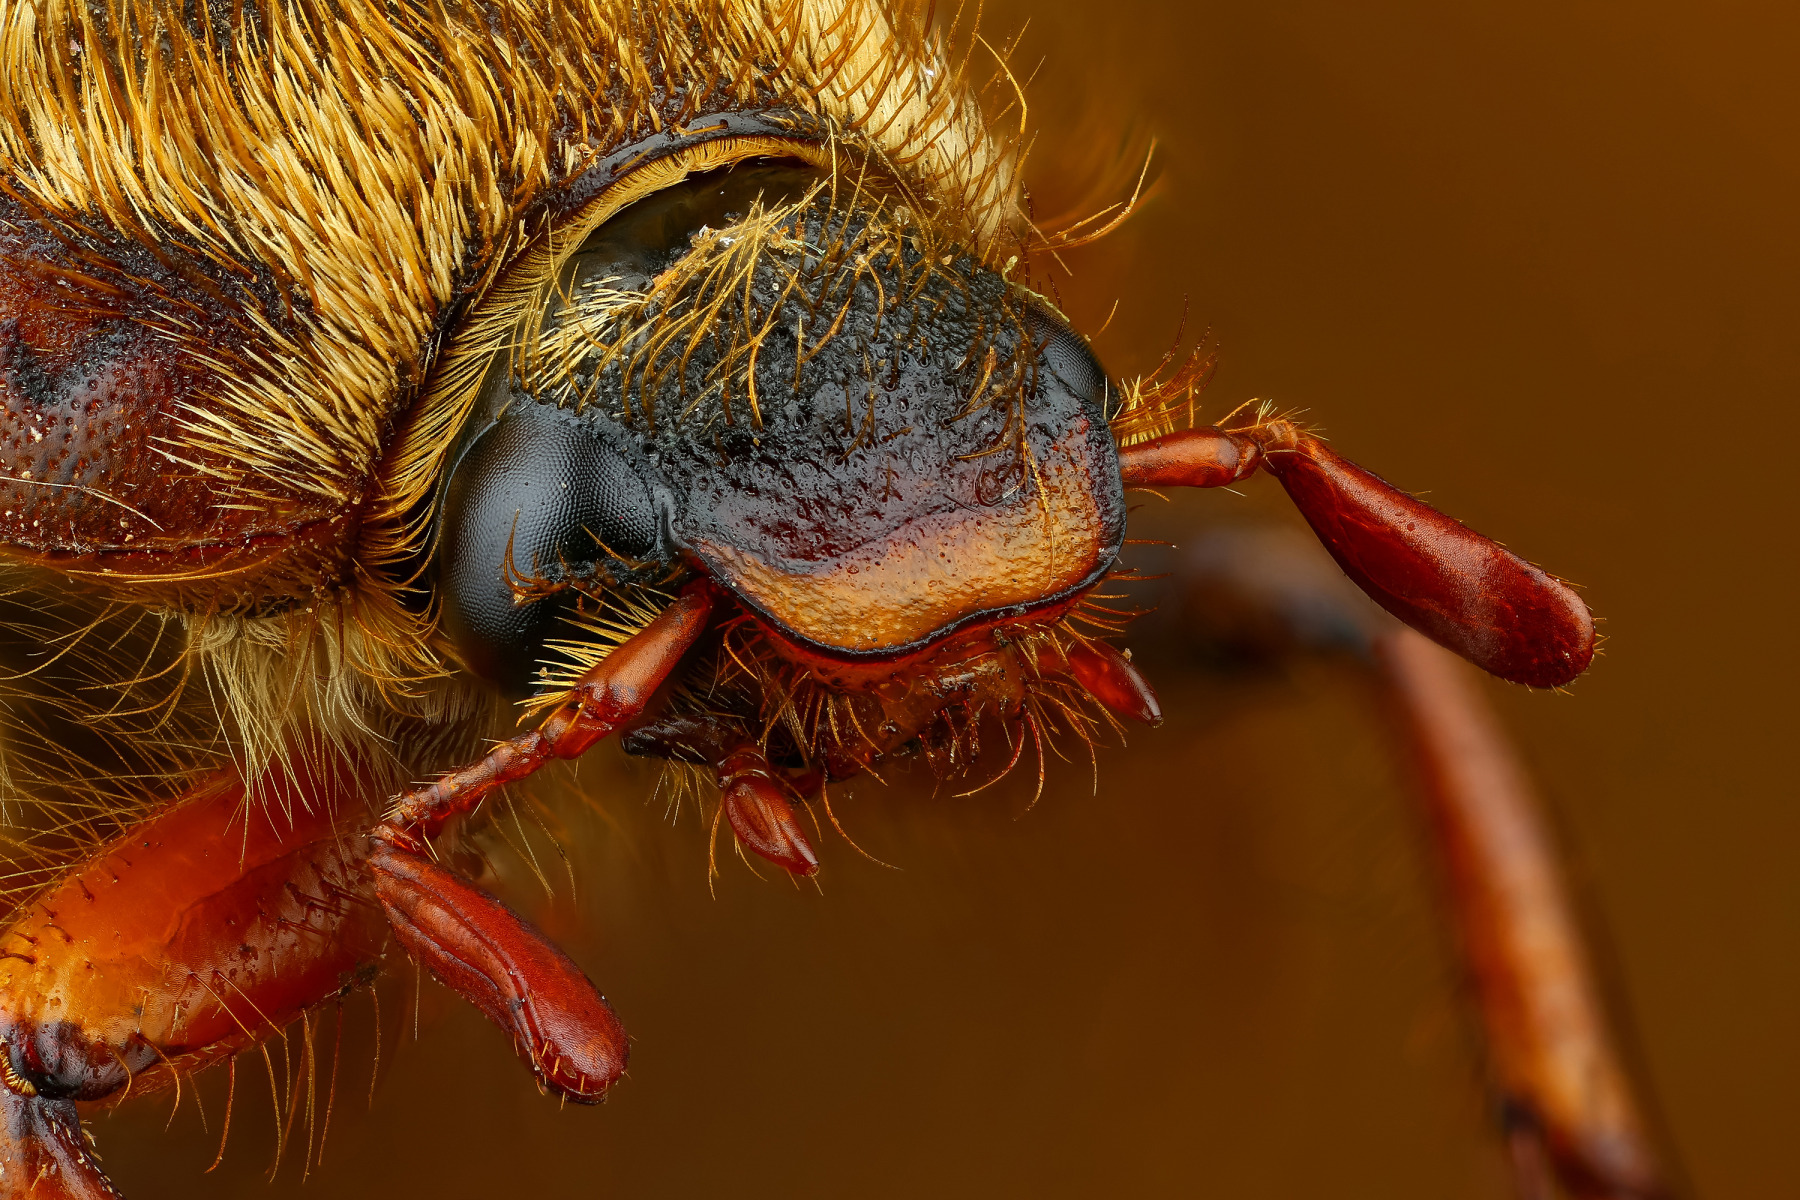 Портрет майского жука | Фотограф Андрей Шаповалов | foto.by фото.бай